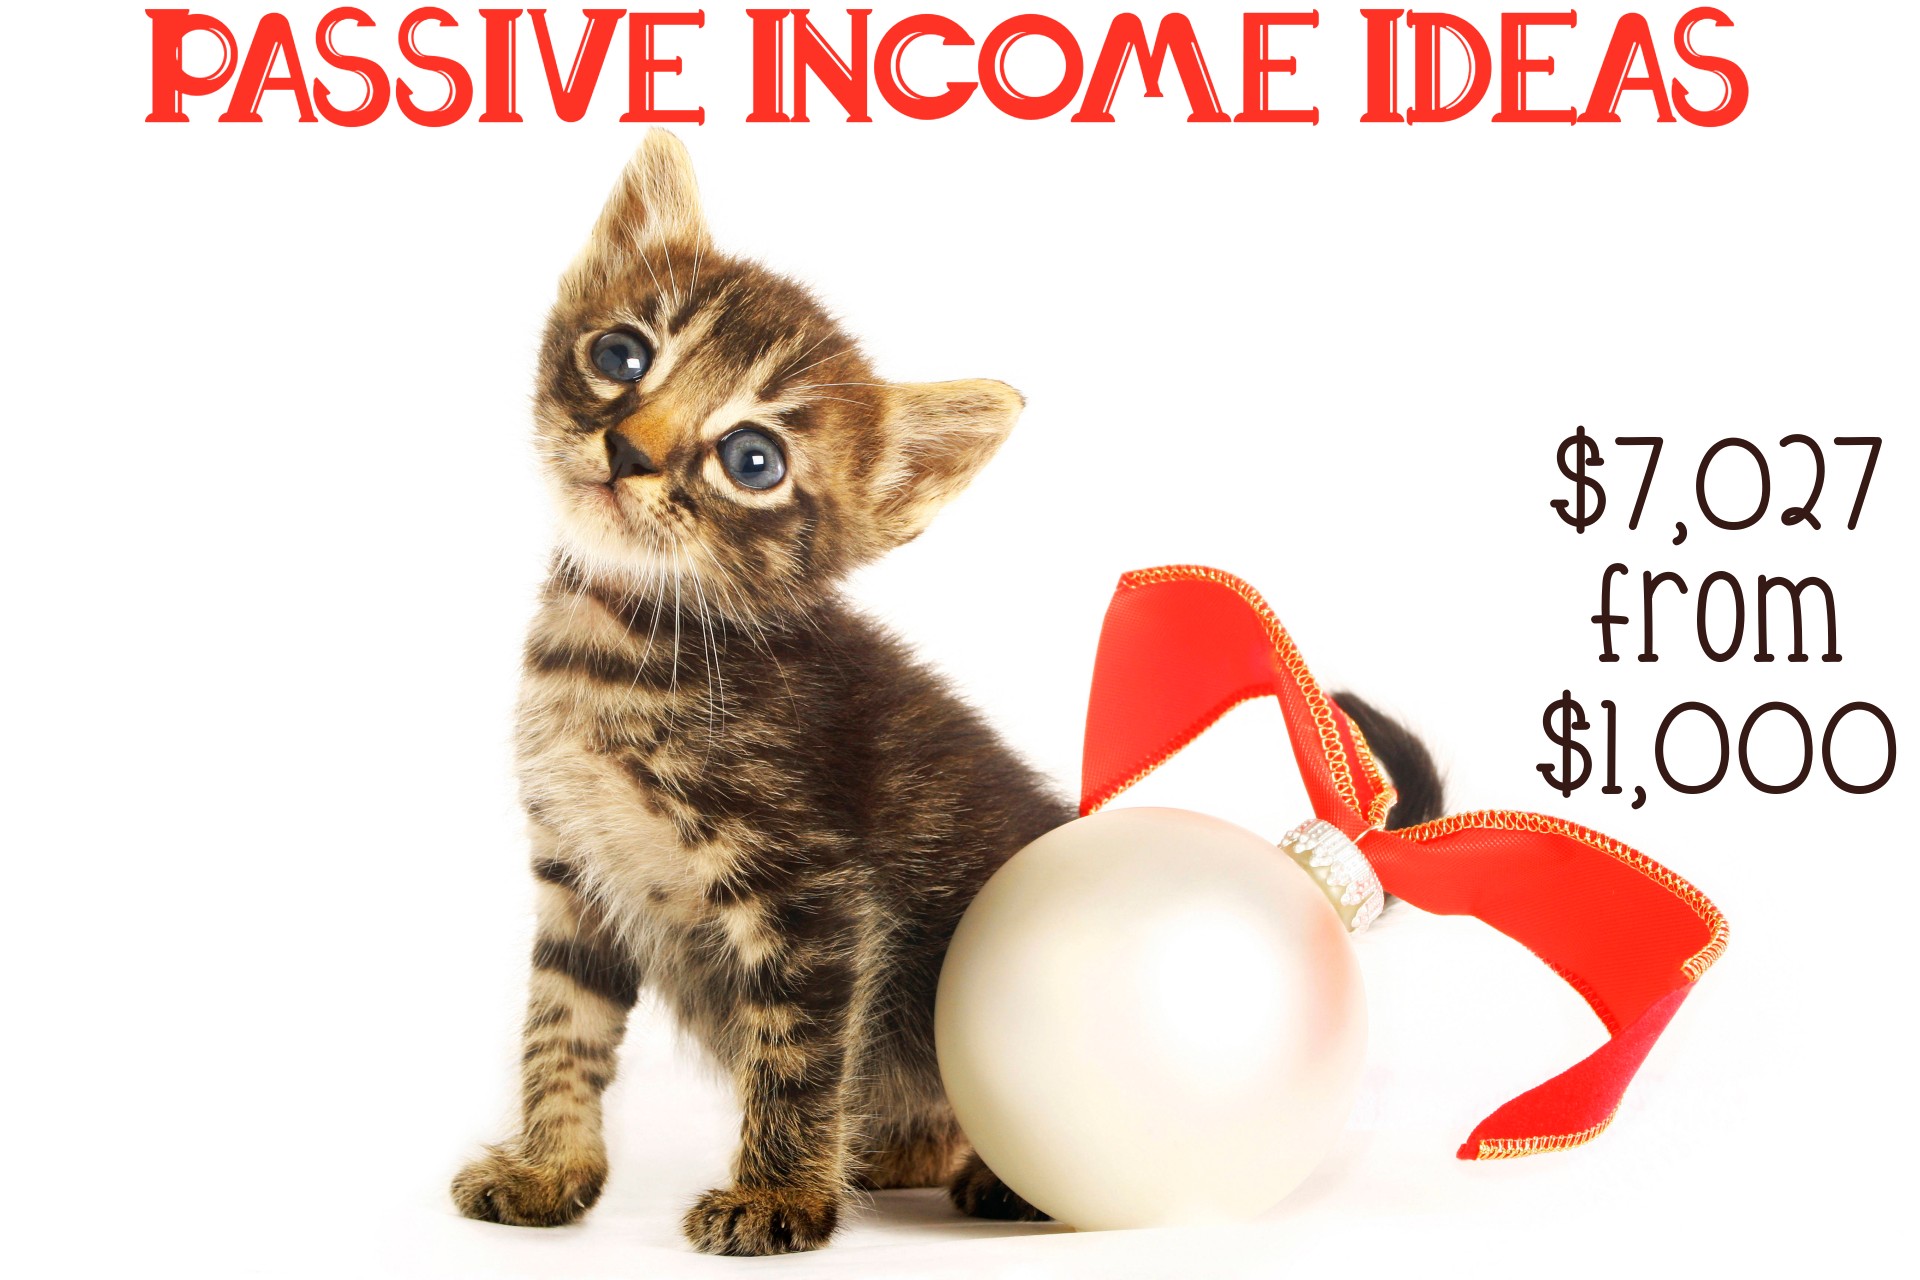 Passive Income Ideas: $7,027 from $1,000